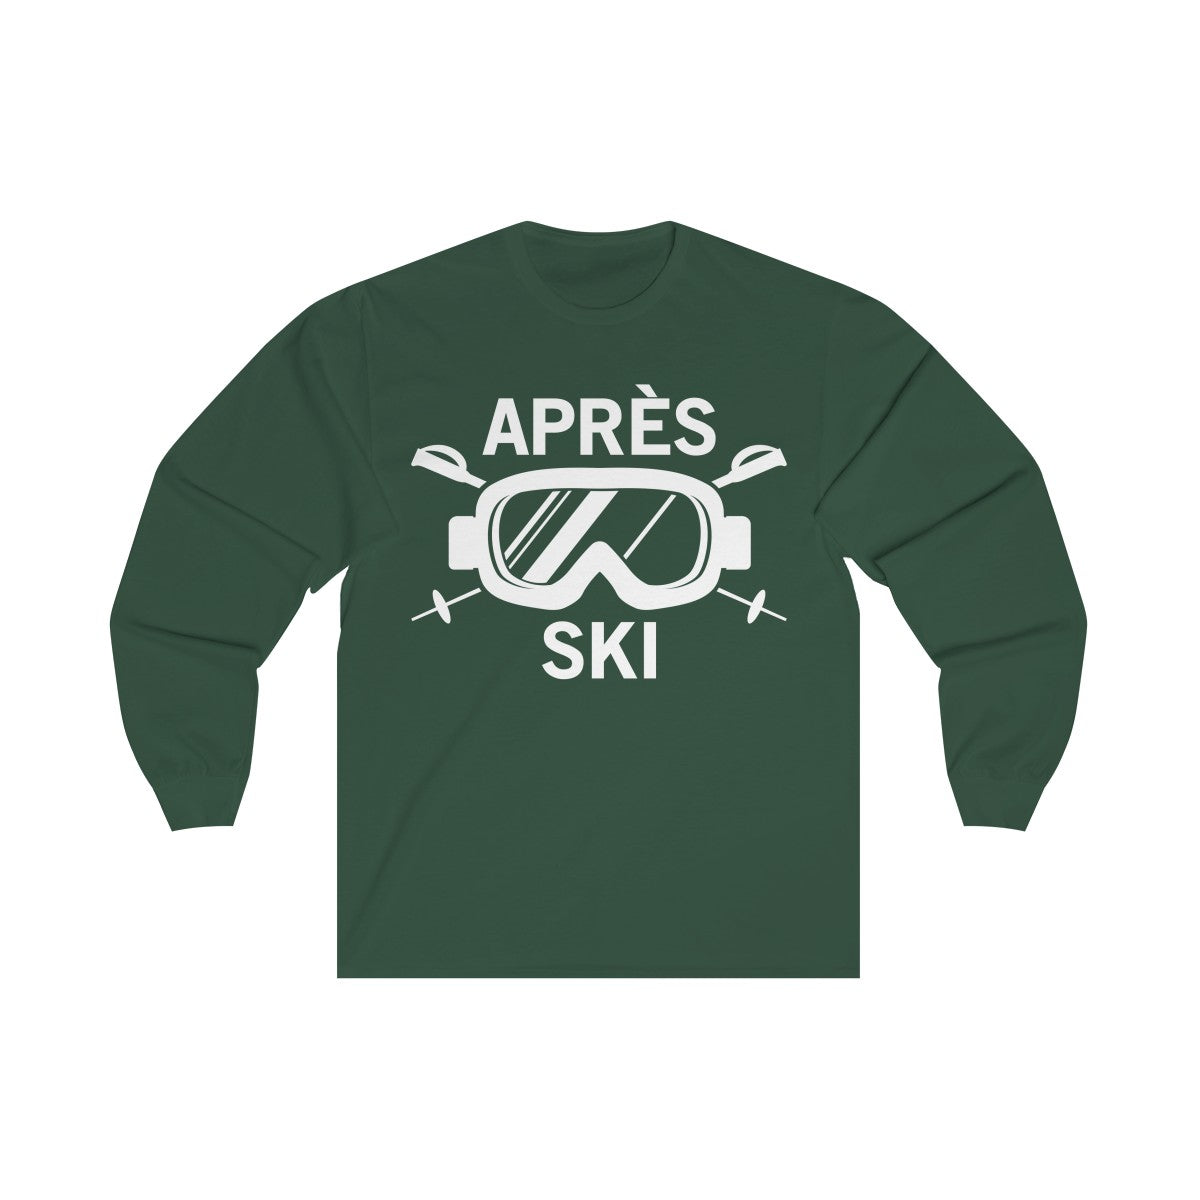 Apres Ski Shirt, Skiing Snow Mountain Ski Snowboard Wear Mask Party, Gifts Long Sleeve Tshirt Tee Starcove Fashion